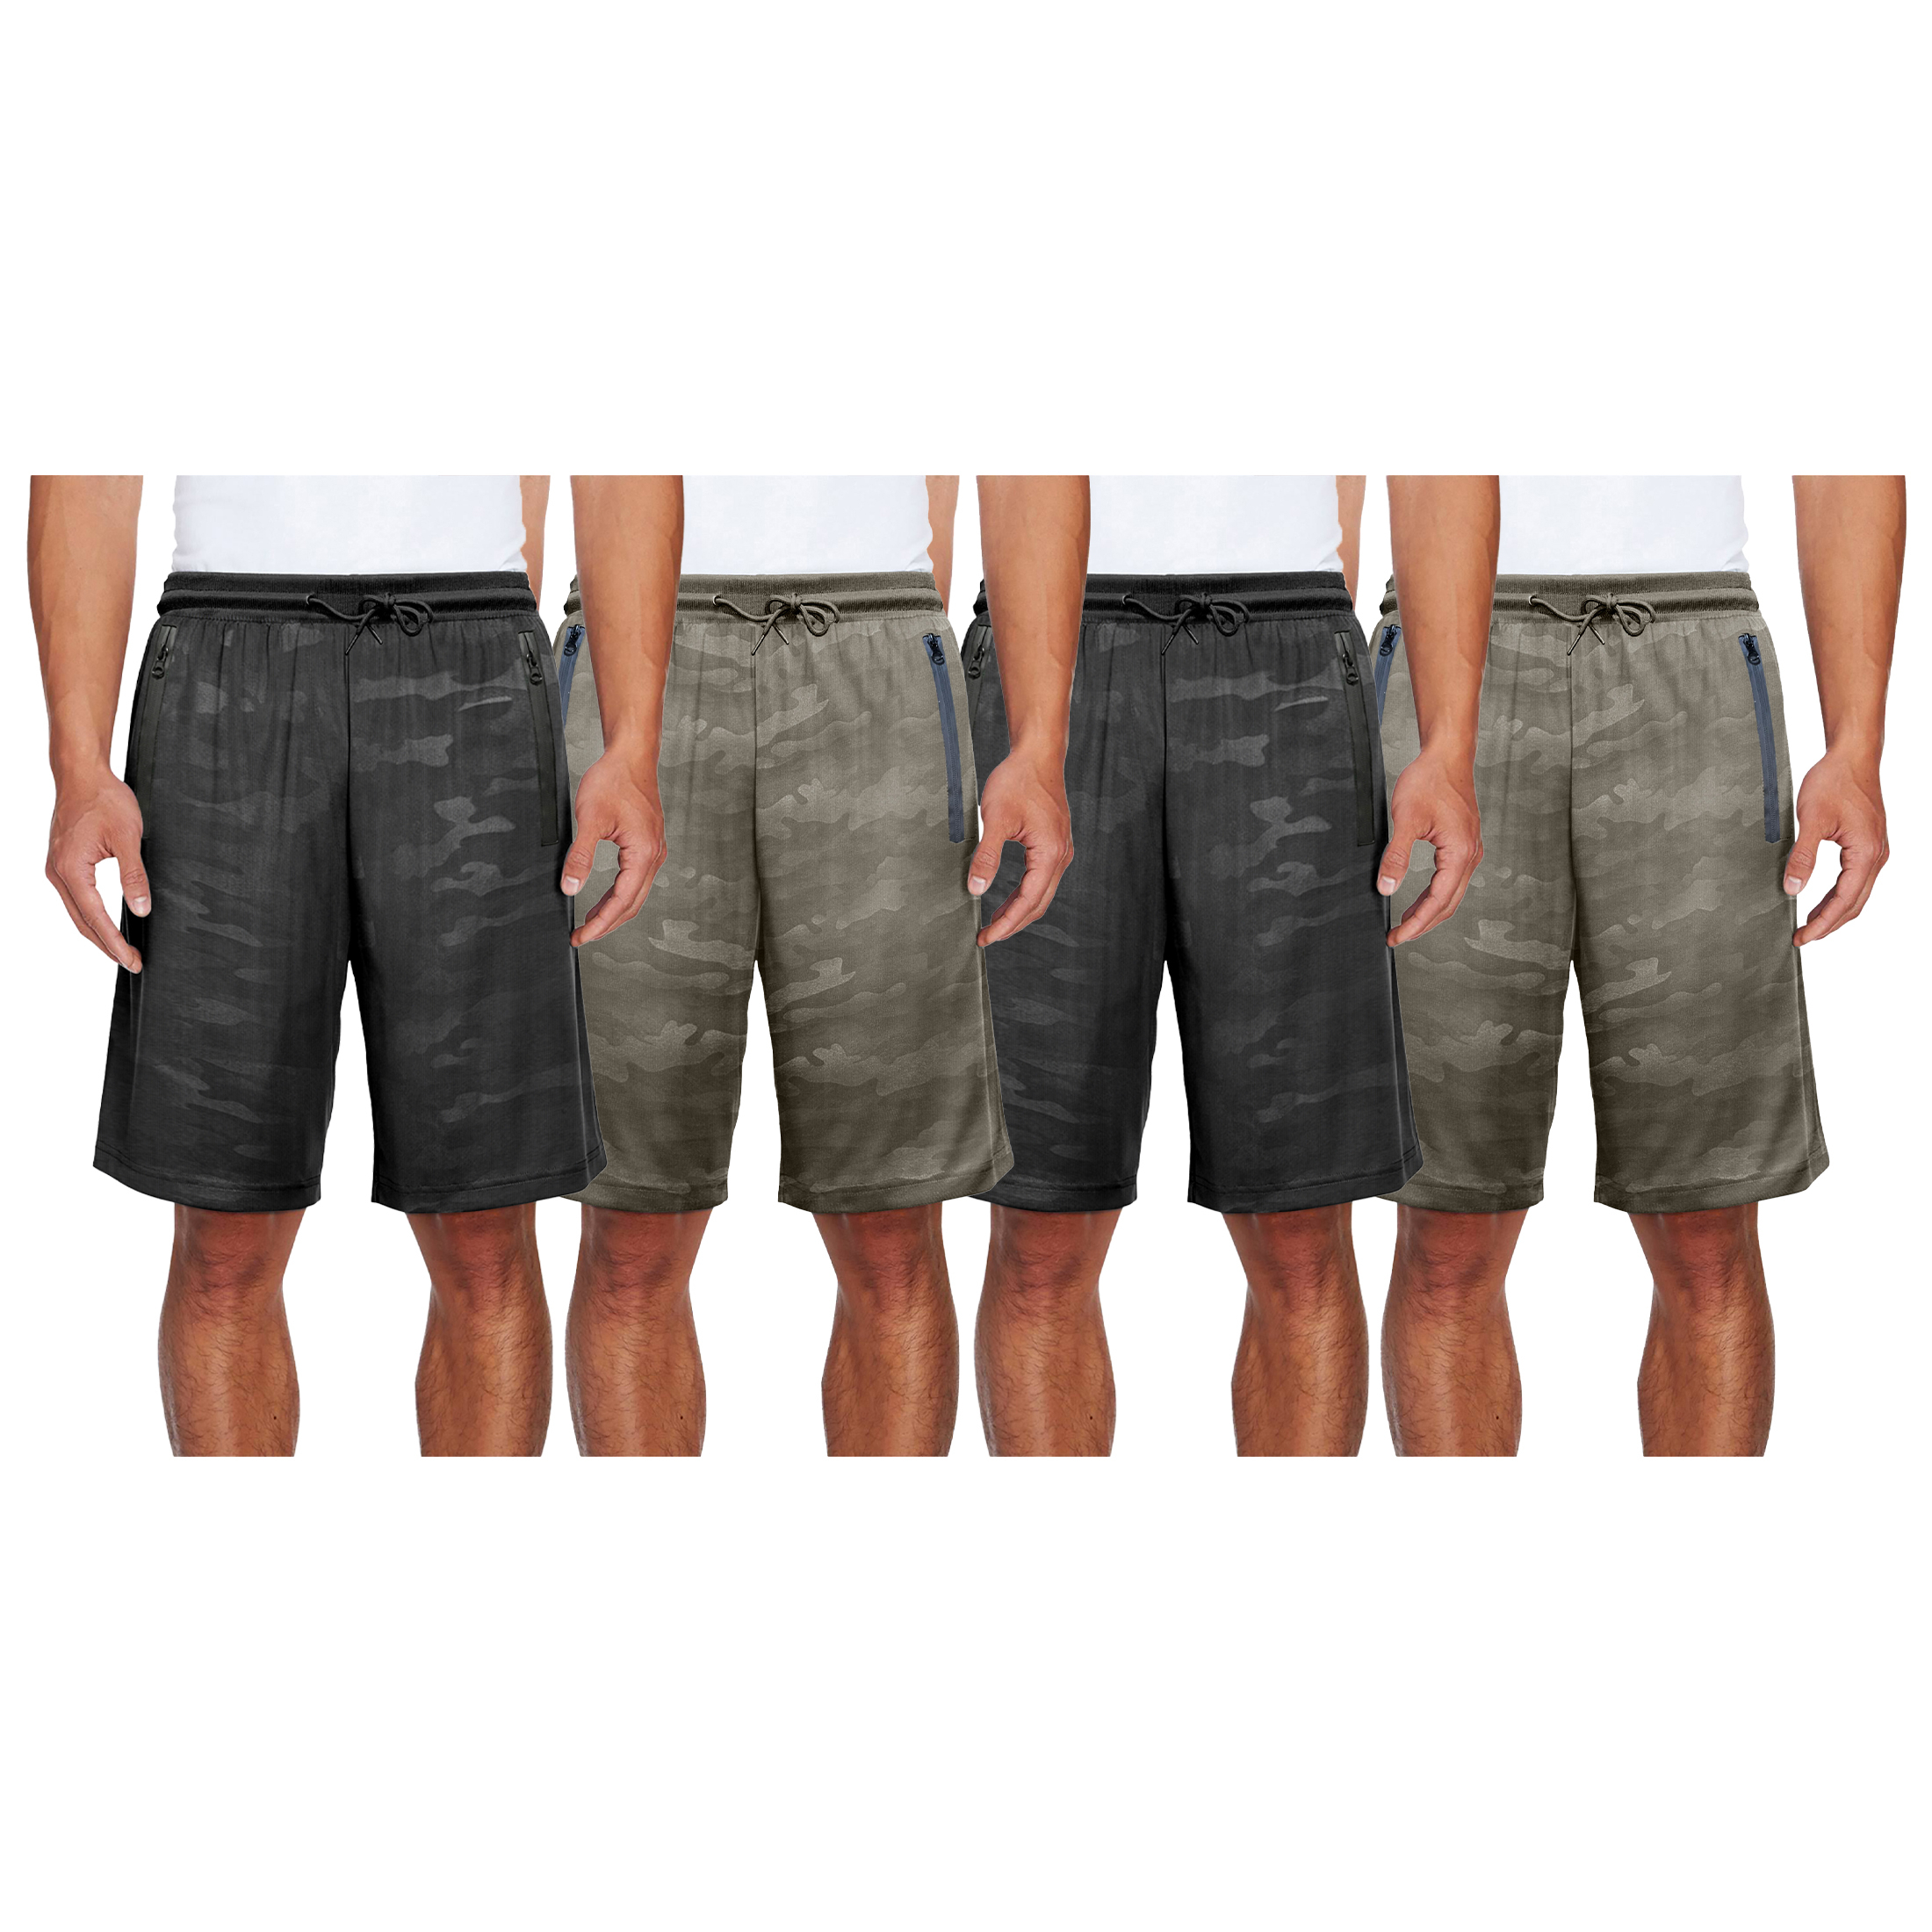 Men's Quick Dry Camo-Print Athletic Performance Active Running Scuba Shorts - Olive, Medium